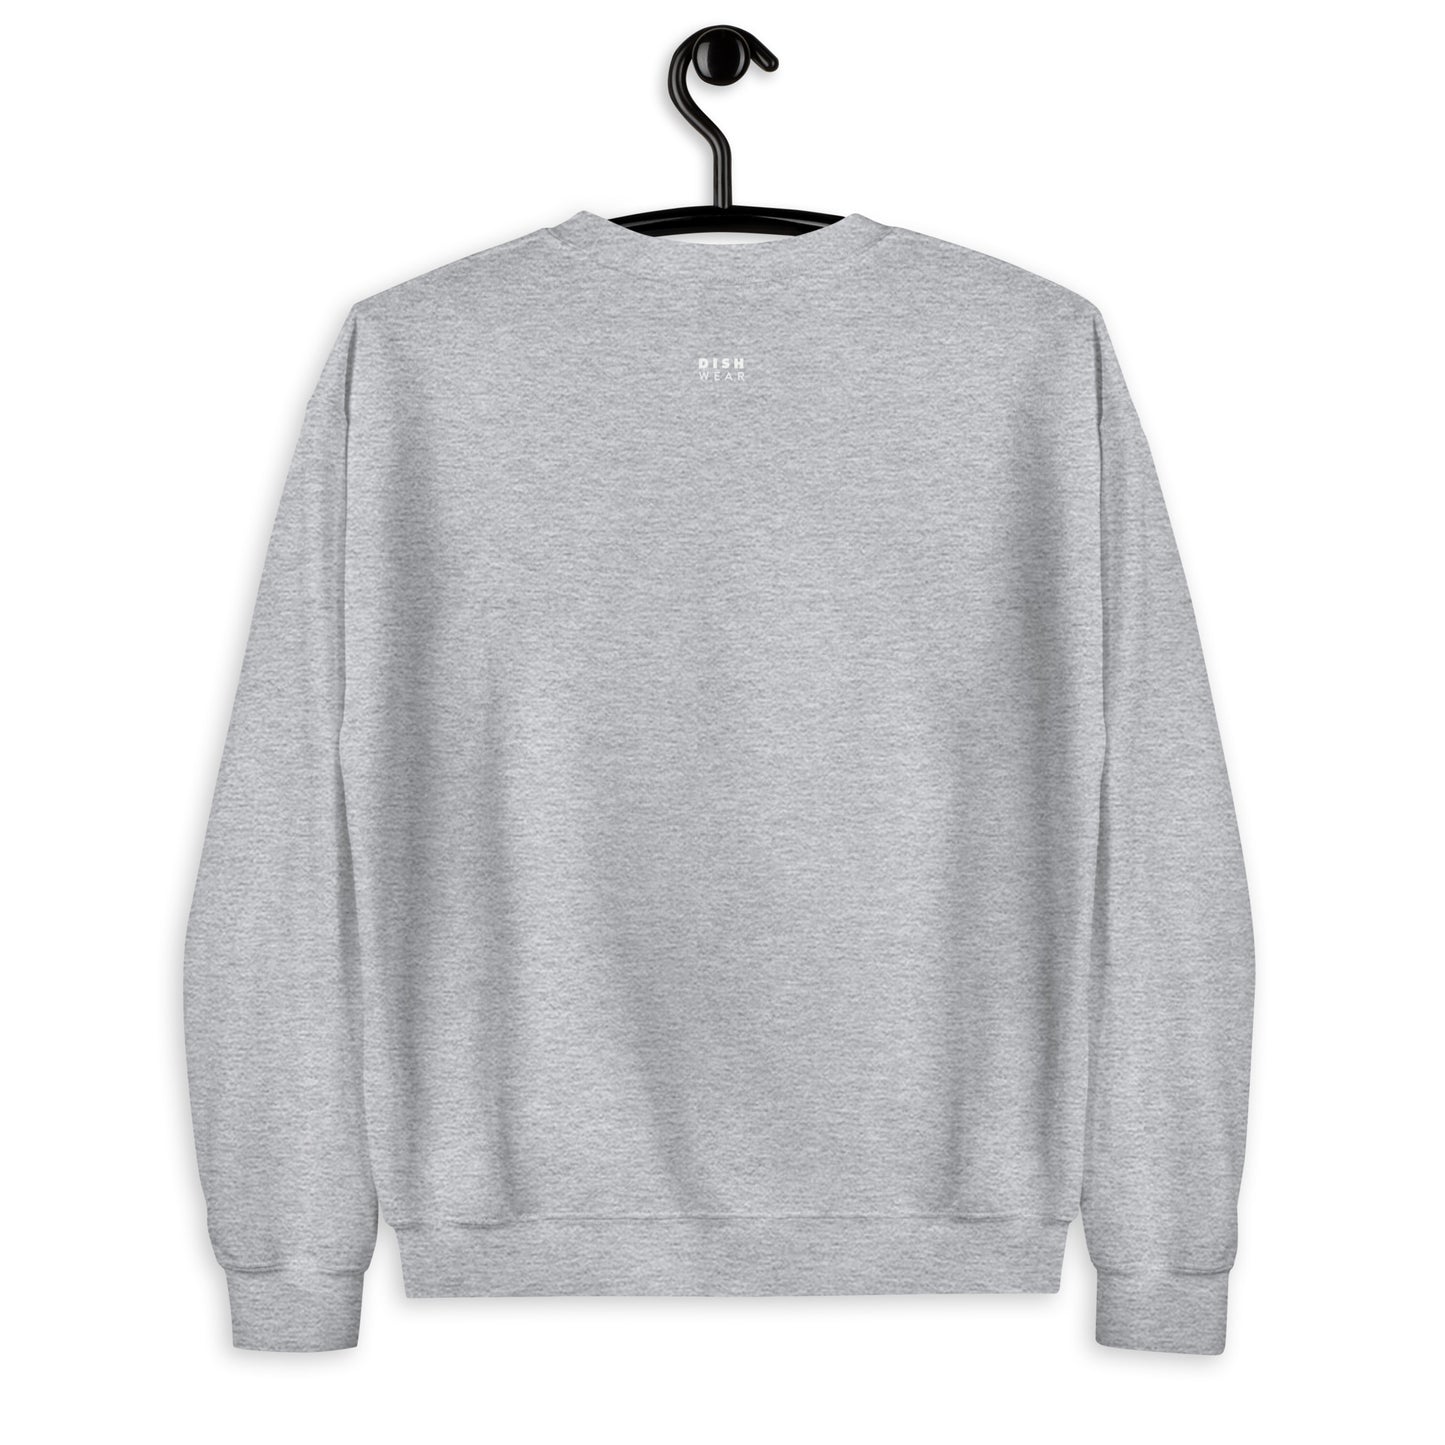 Peppermint Sweatshirt - Arched Font